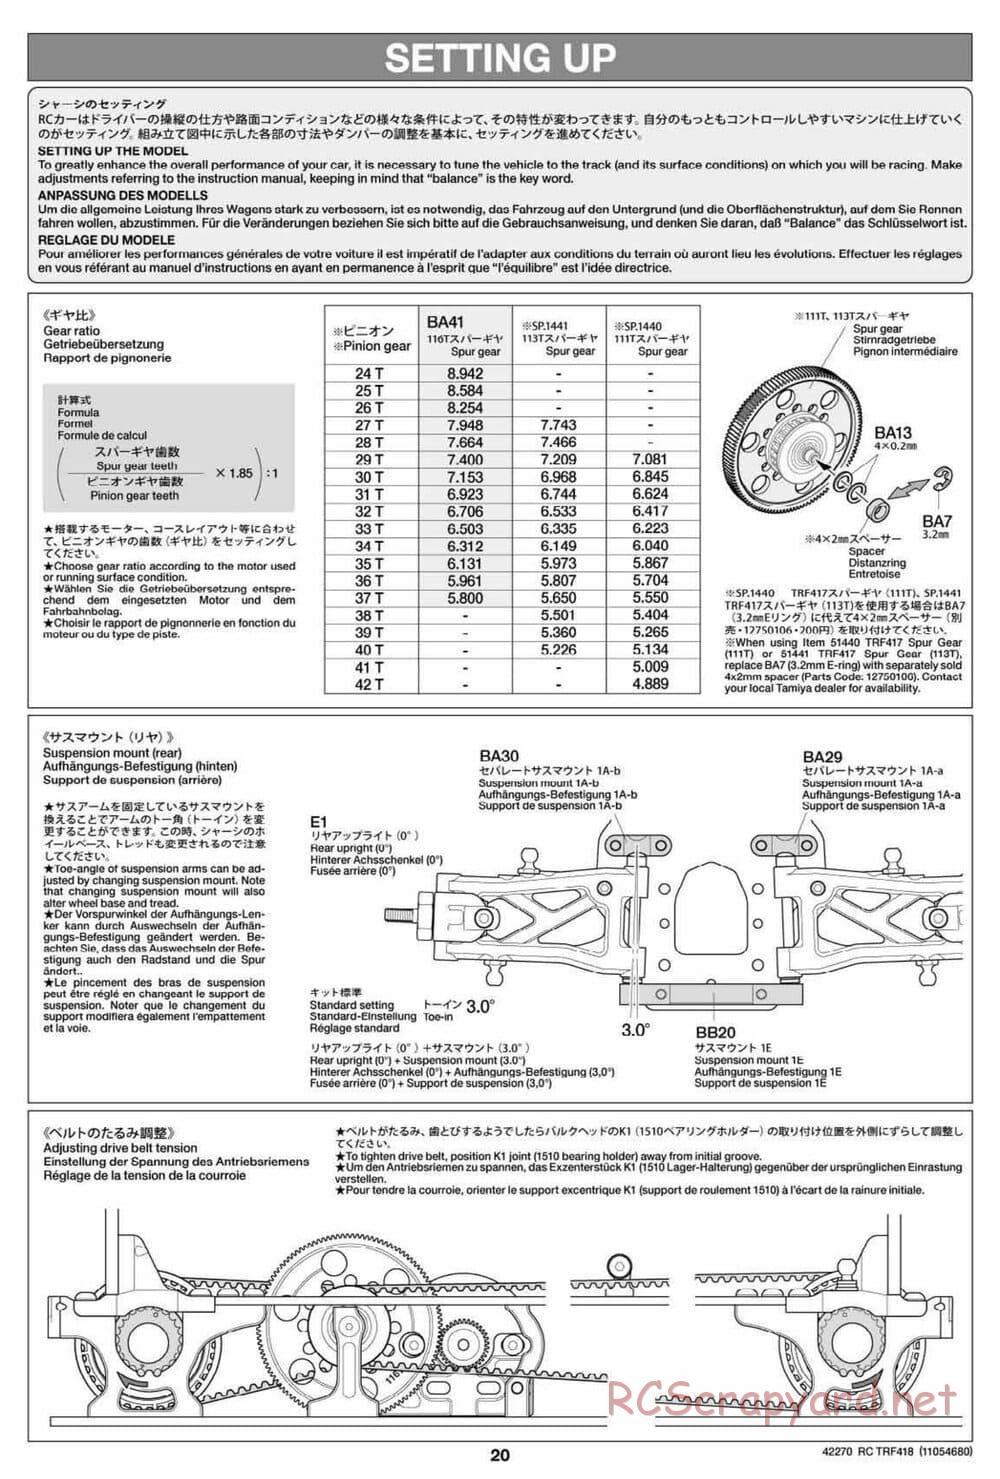 Tamiya - TRF418 Chassis - Manual - Page 20